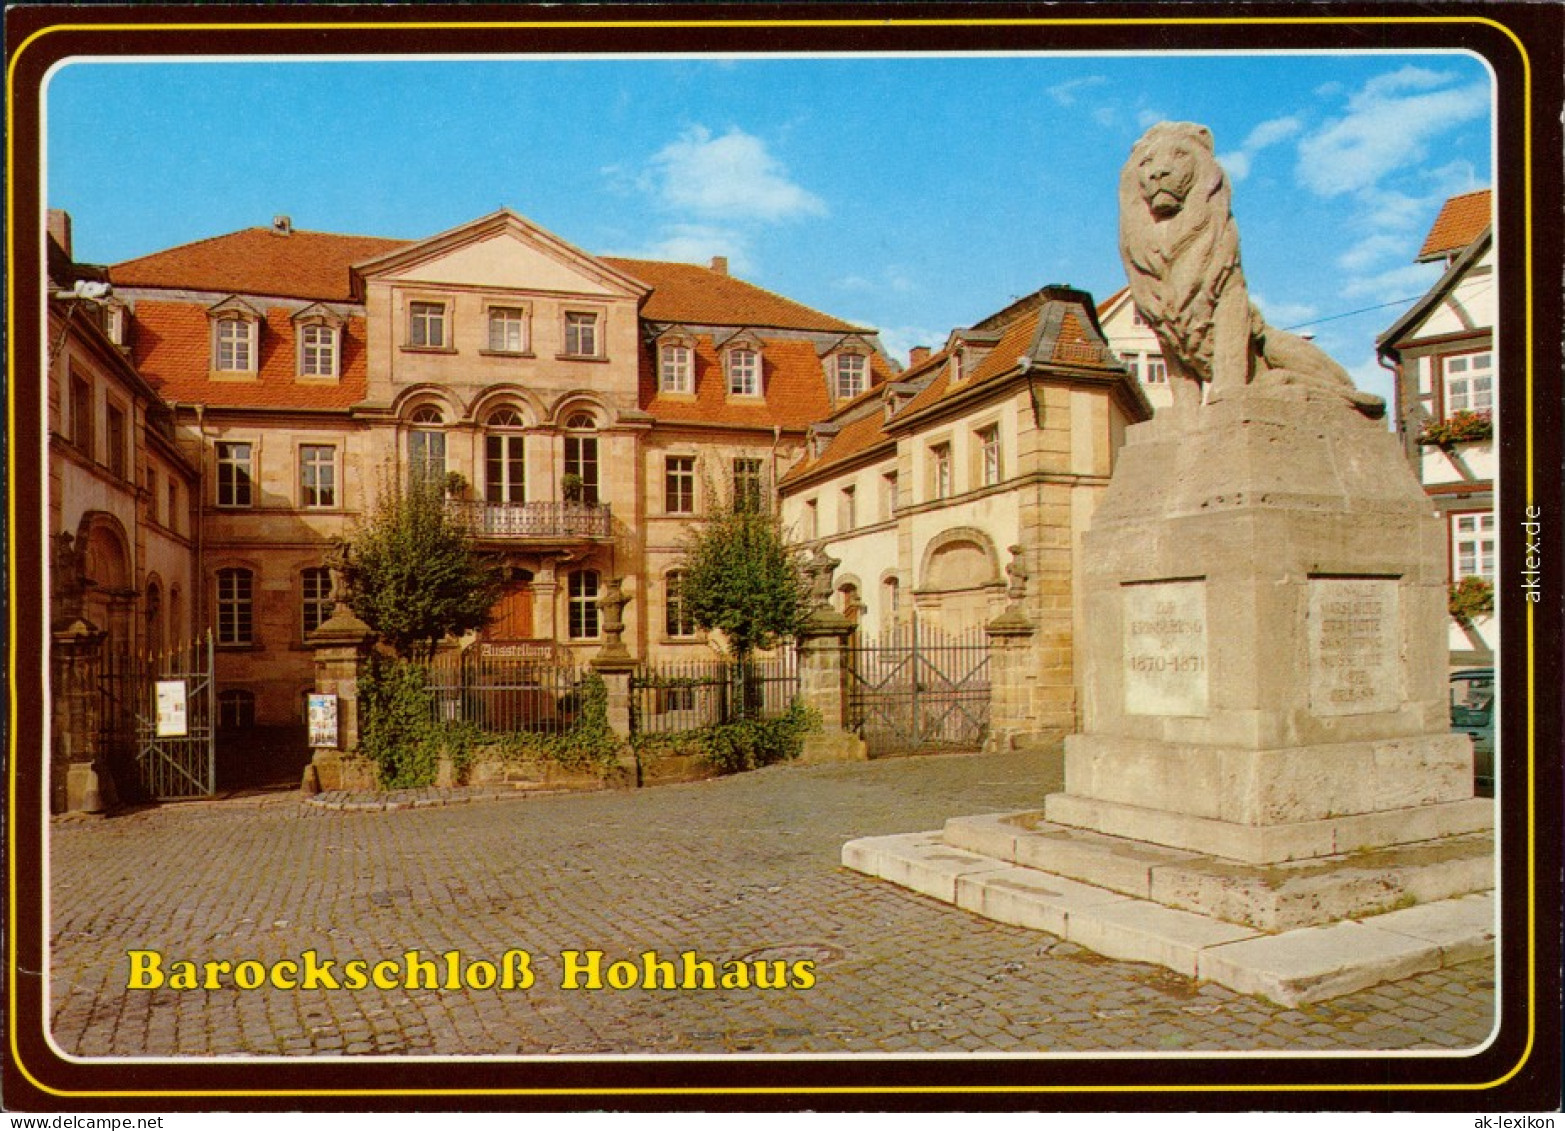 Ansichtskarte Lauterbach (Hessen) Barokschloss Hohhaus/Regionalmuseum 1995 - Lauterbach